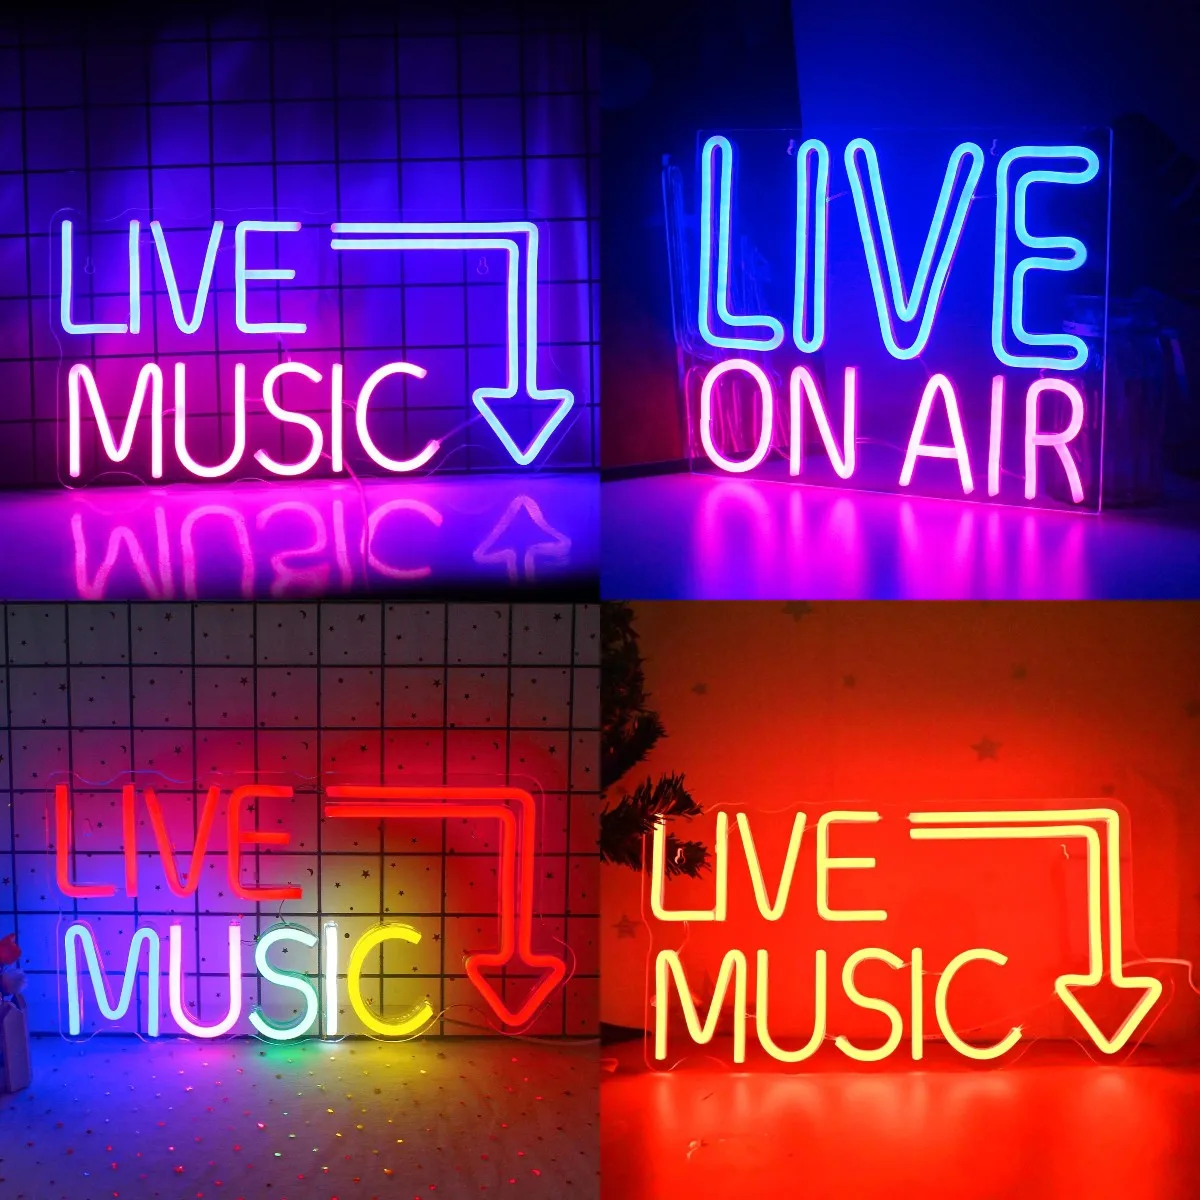 Live Music Neon Signs Music LED Neon Light Letter Light Sign Bar Light up for Beer Bar Music Studio Bedroom Wall Decor Party